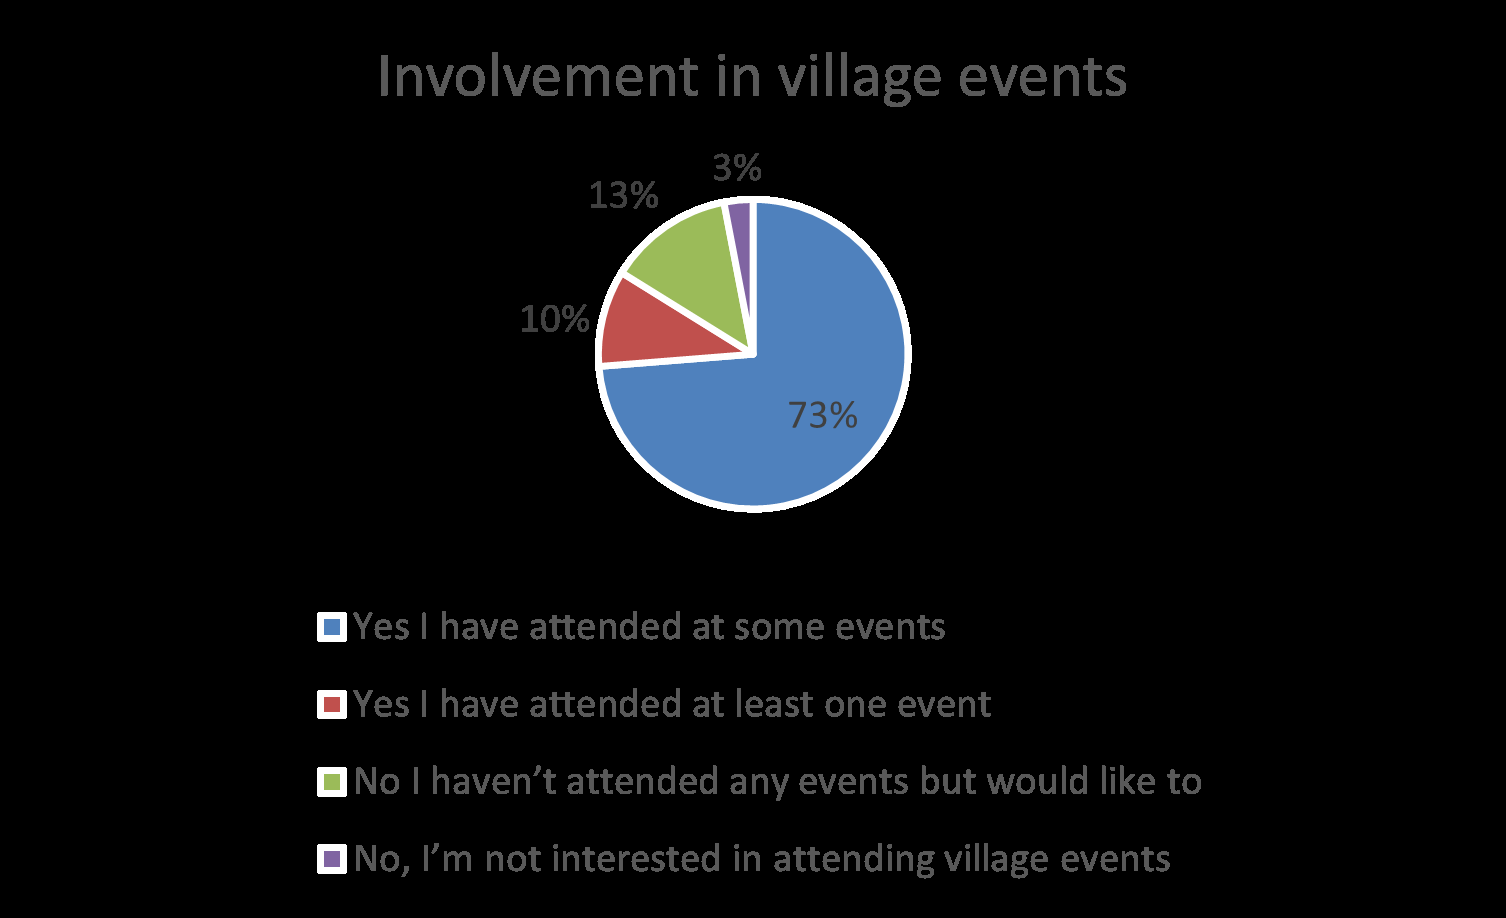 Involvement in village events pie chart